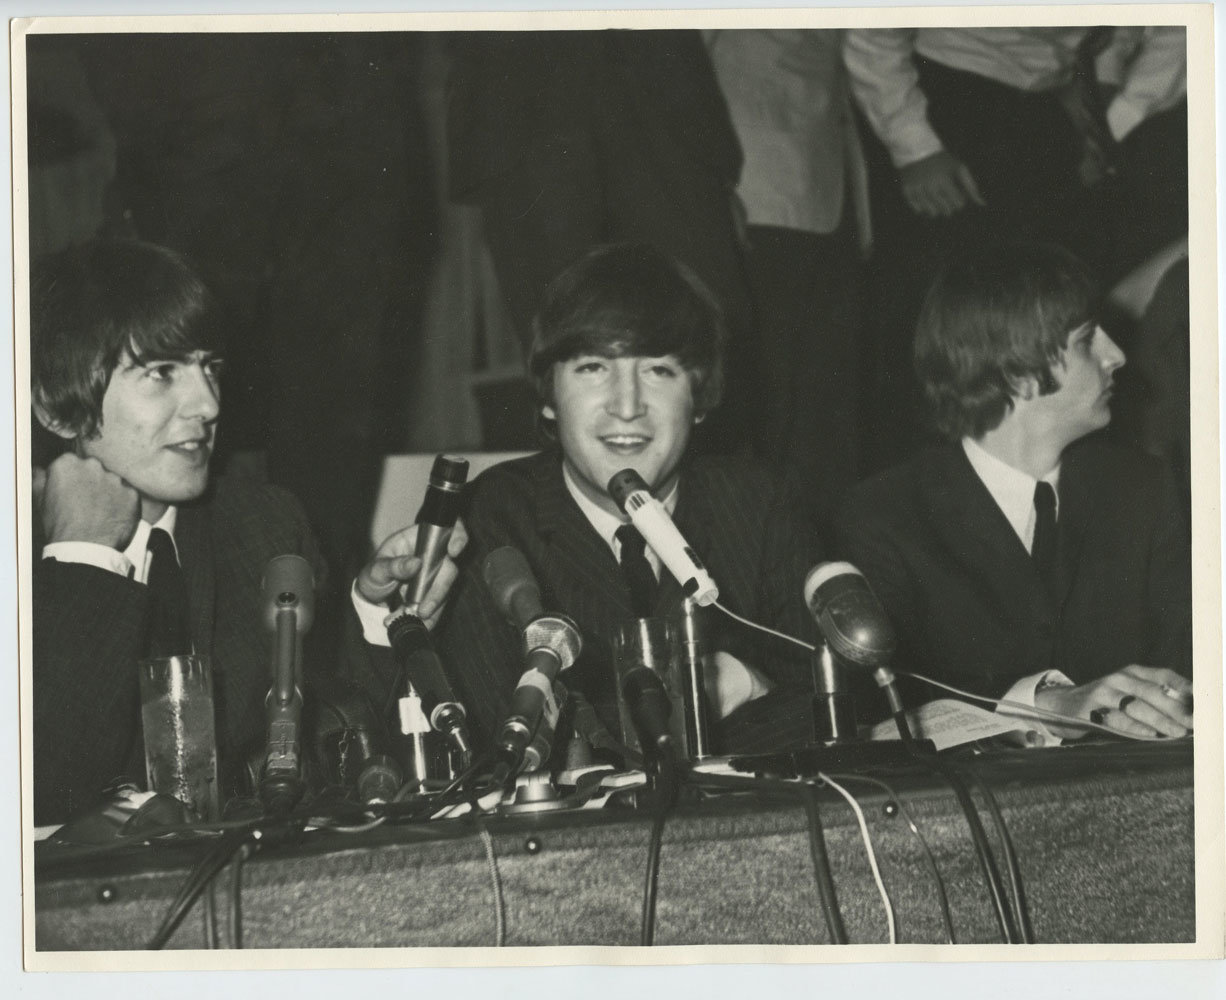 The Beatles Photo 1964 Aug 23 LA Press Conference